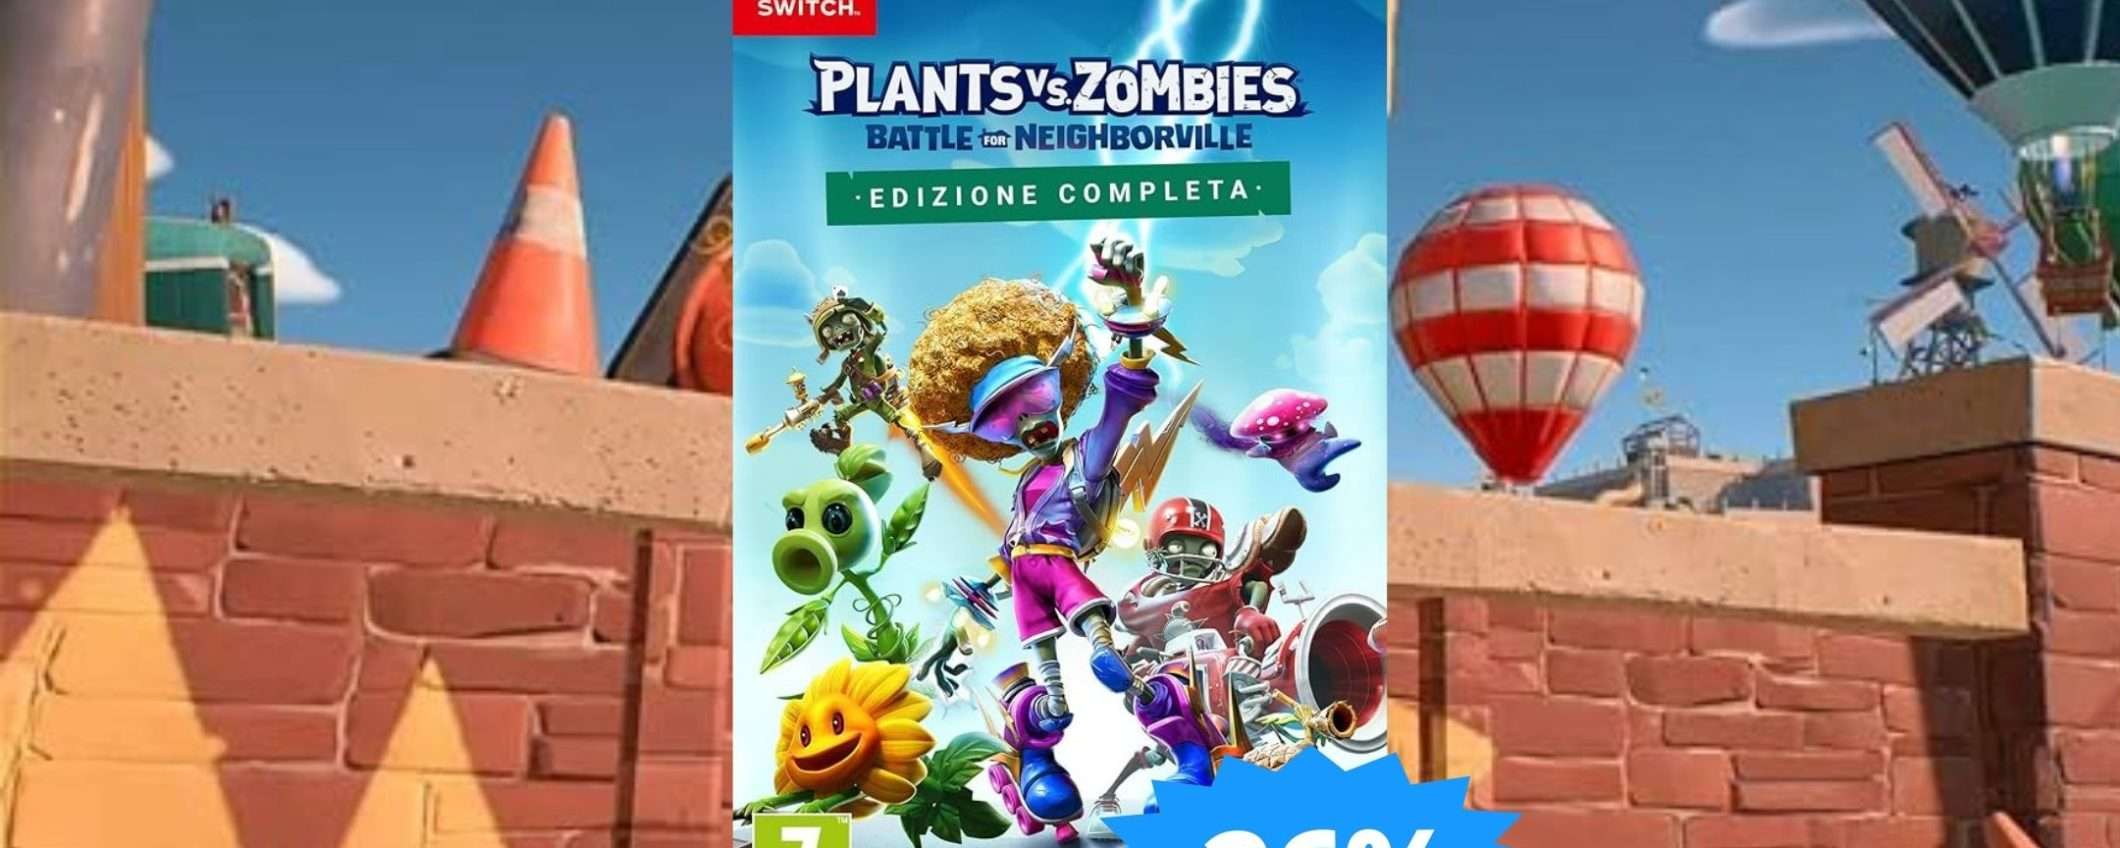 Plants vs Zombies per Switch: SUPER offerta del 26%